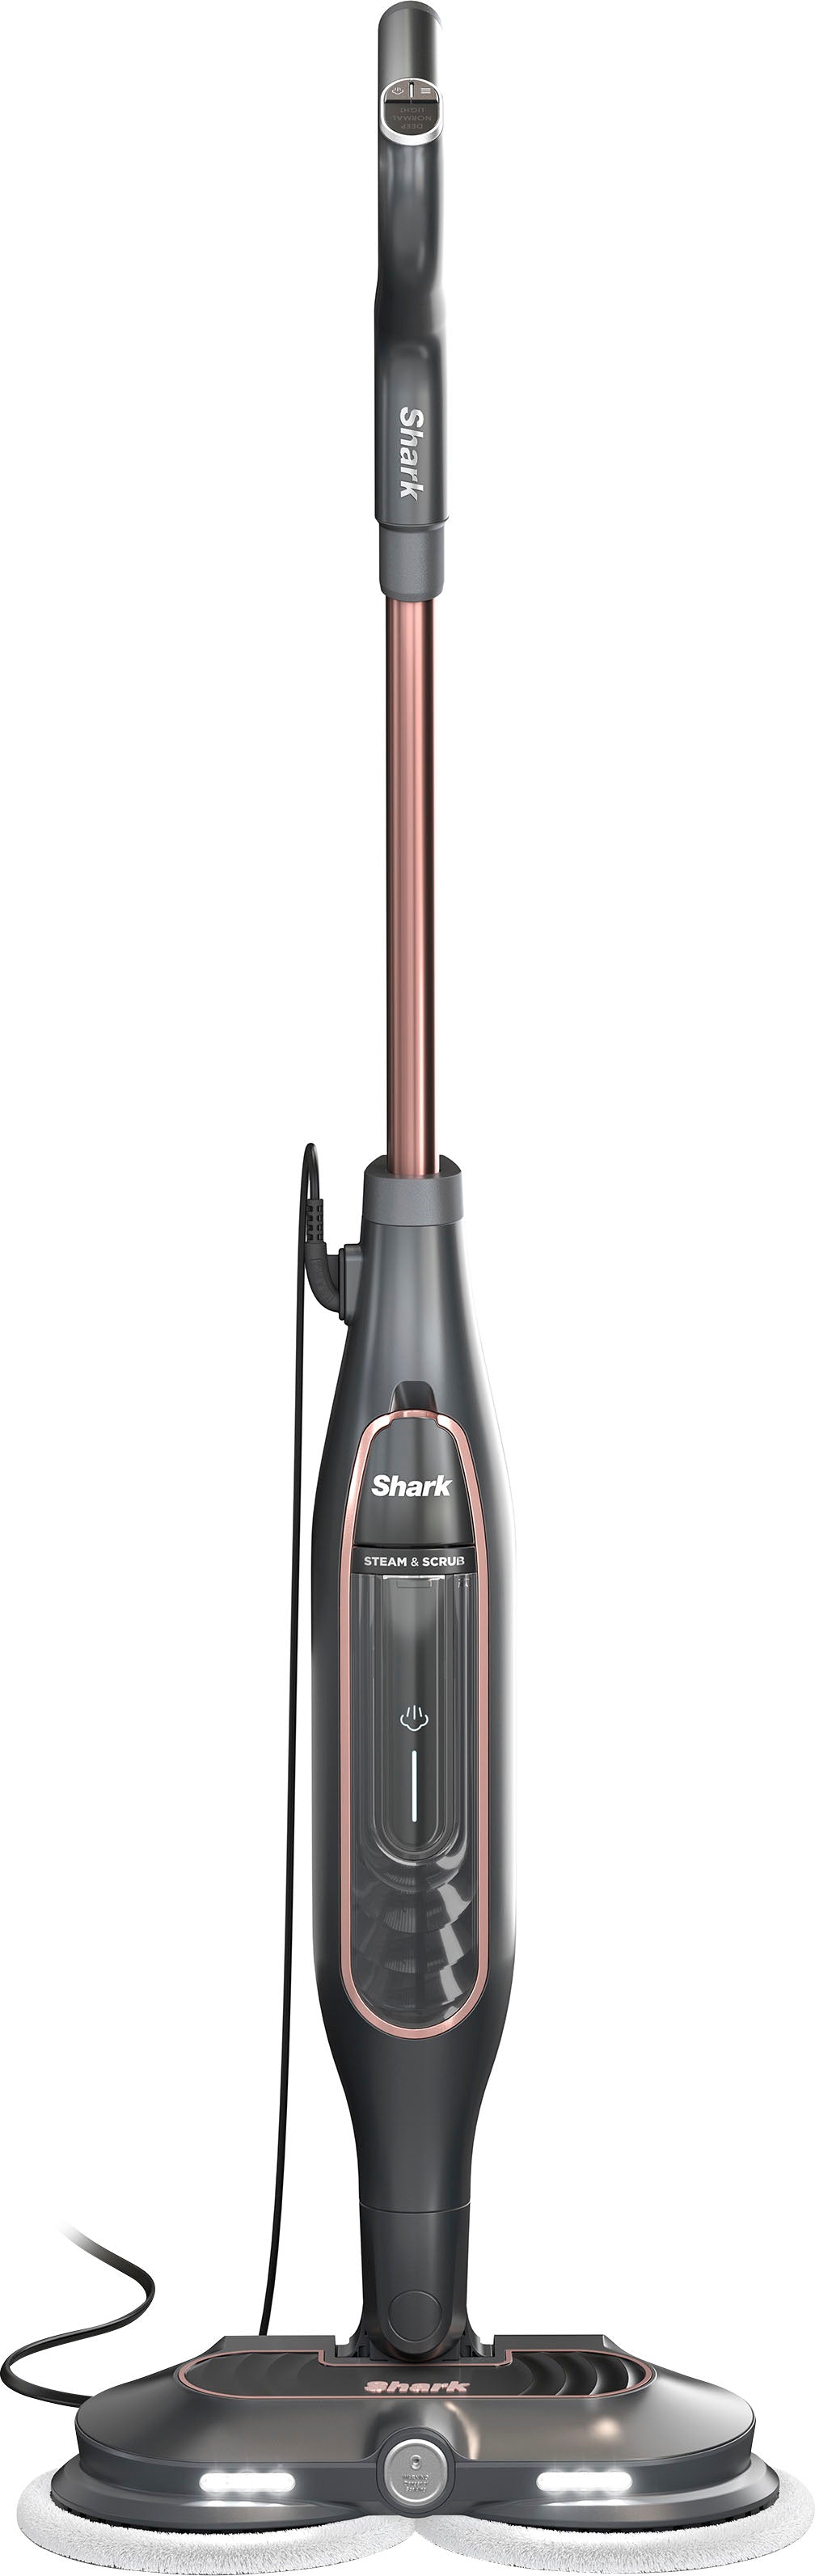 Shark - Steam & Scrub with Steam Blaster Technology Hard Floor Steam Mop - Gray, Rose Gold_0